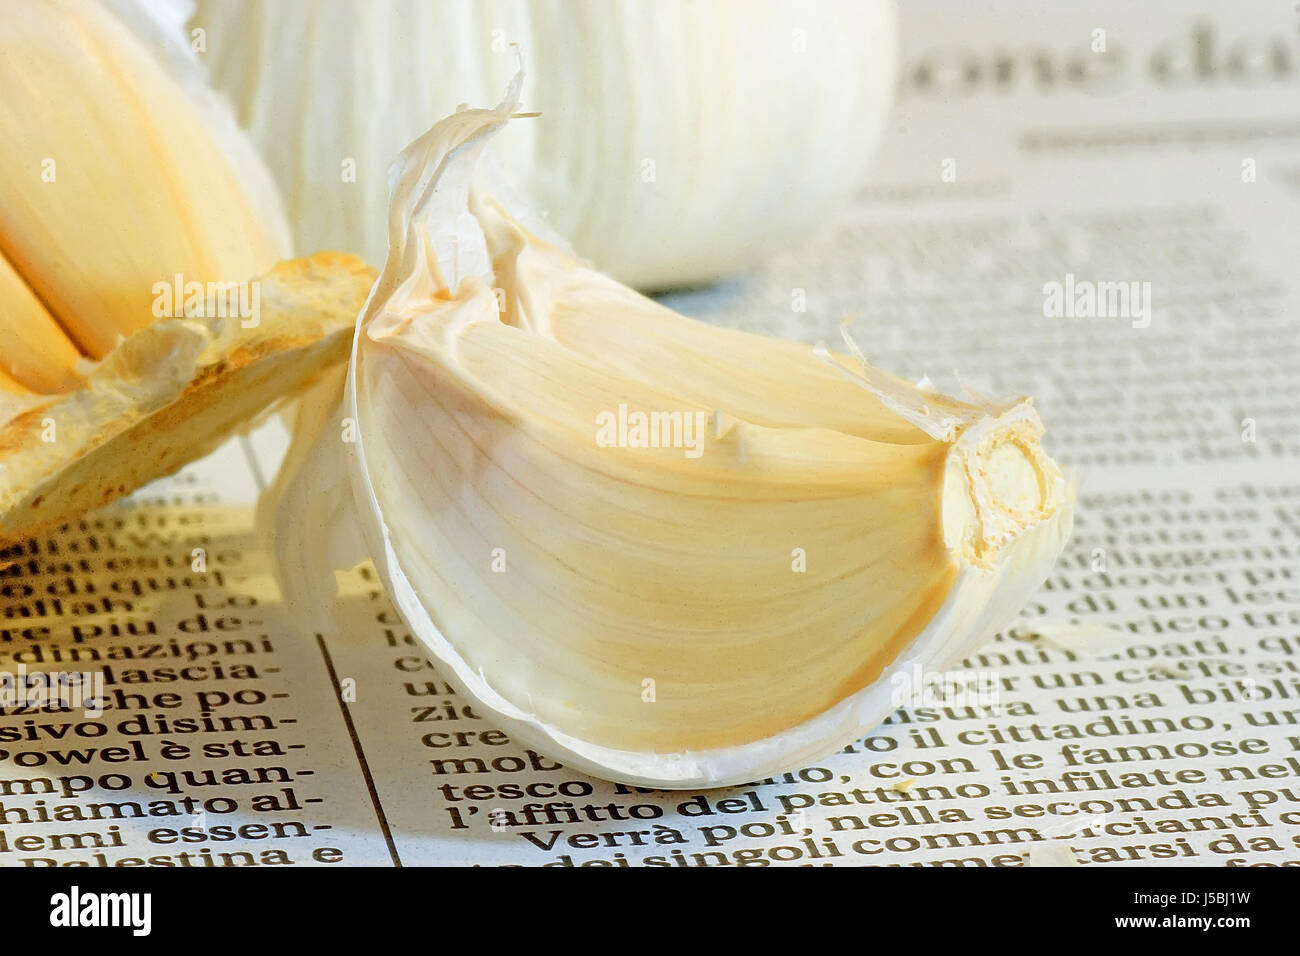 clove of garlic Stock Photo